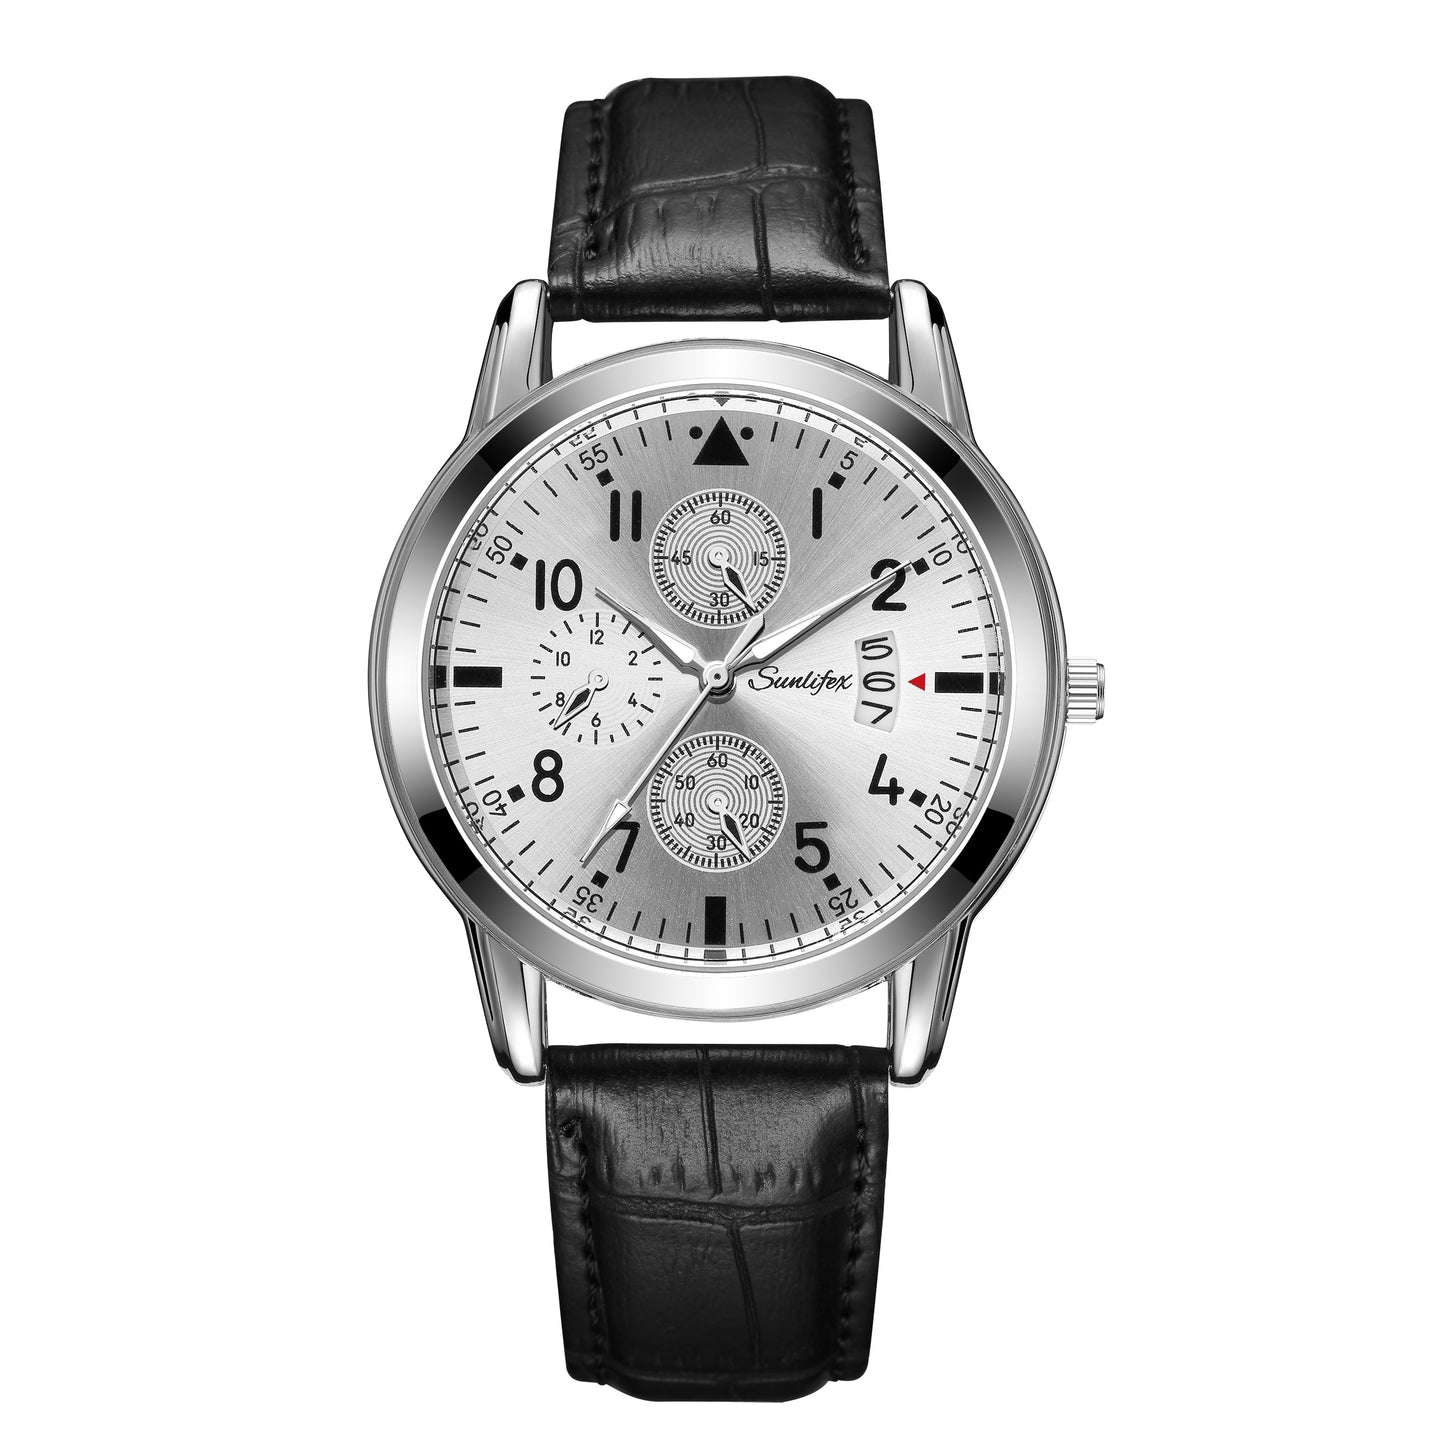 Reloj para Hombre Mens Silver Ray Black Leather Band Watch Shell hard Glass Dial Analog Quartz Wrist Watch Relogio Masculino